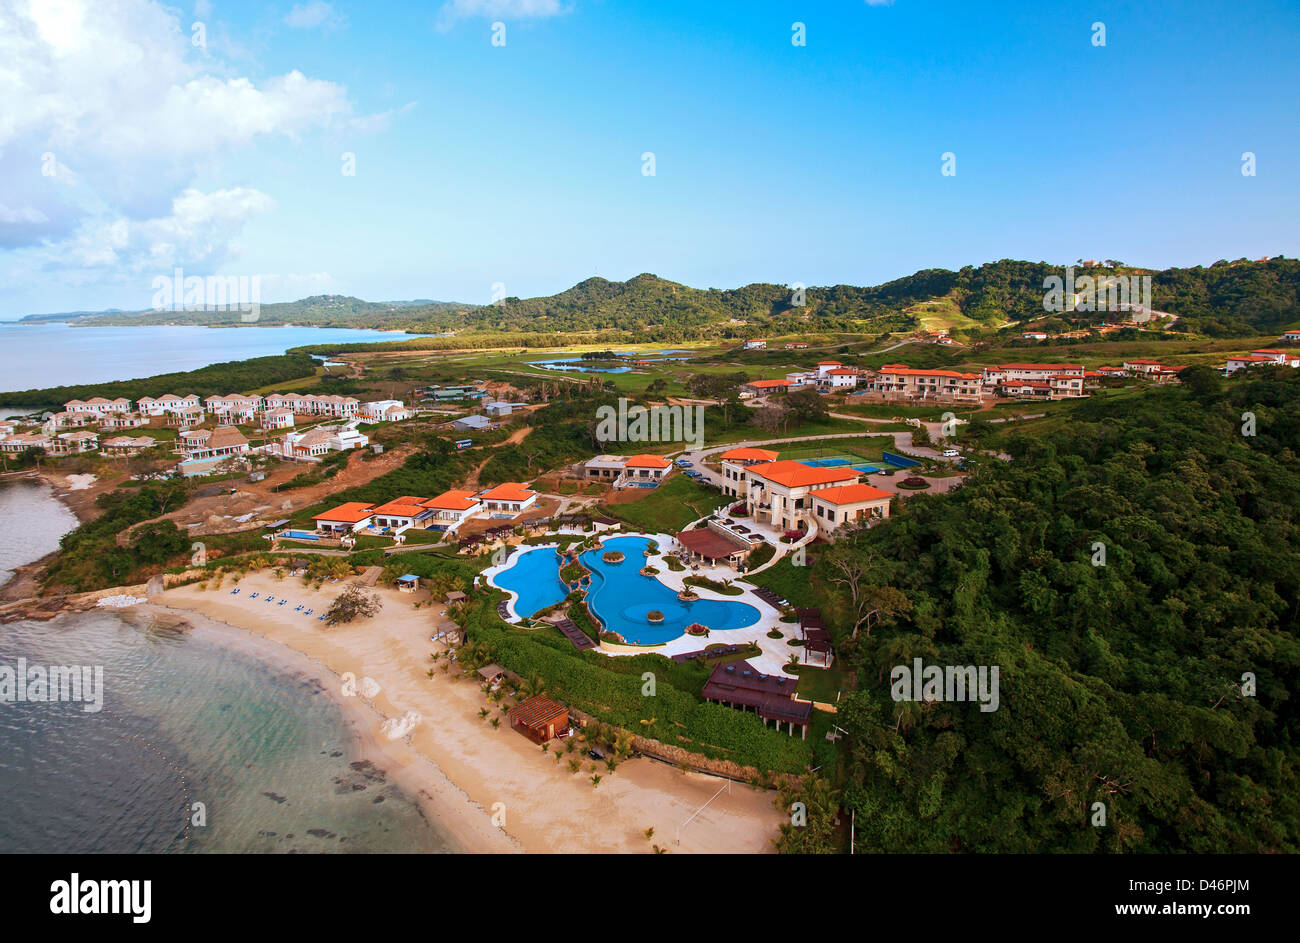 Pristine Bay Resort and Black Pearl Golf course on the island of Roatan, Honduras Stock Photo